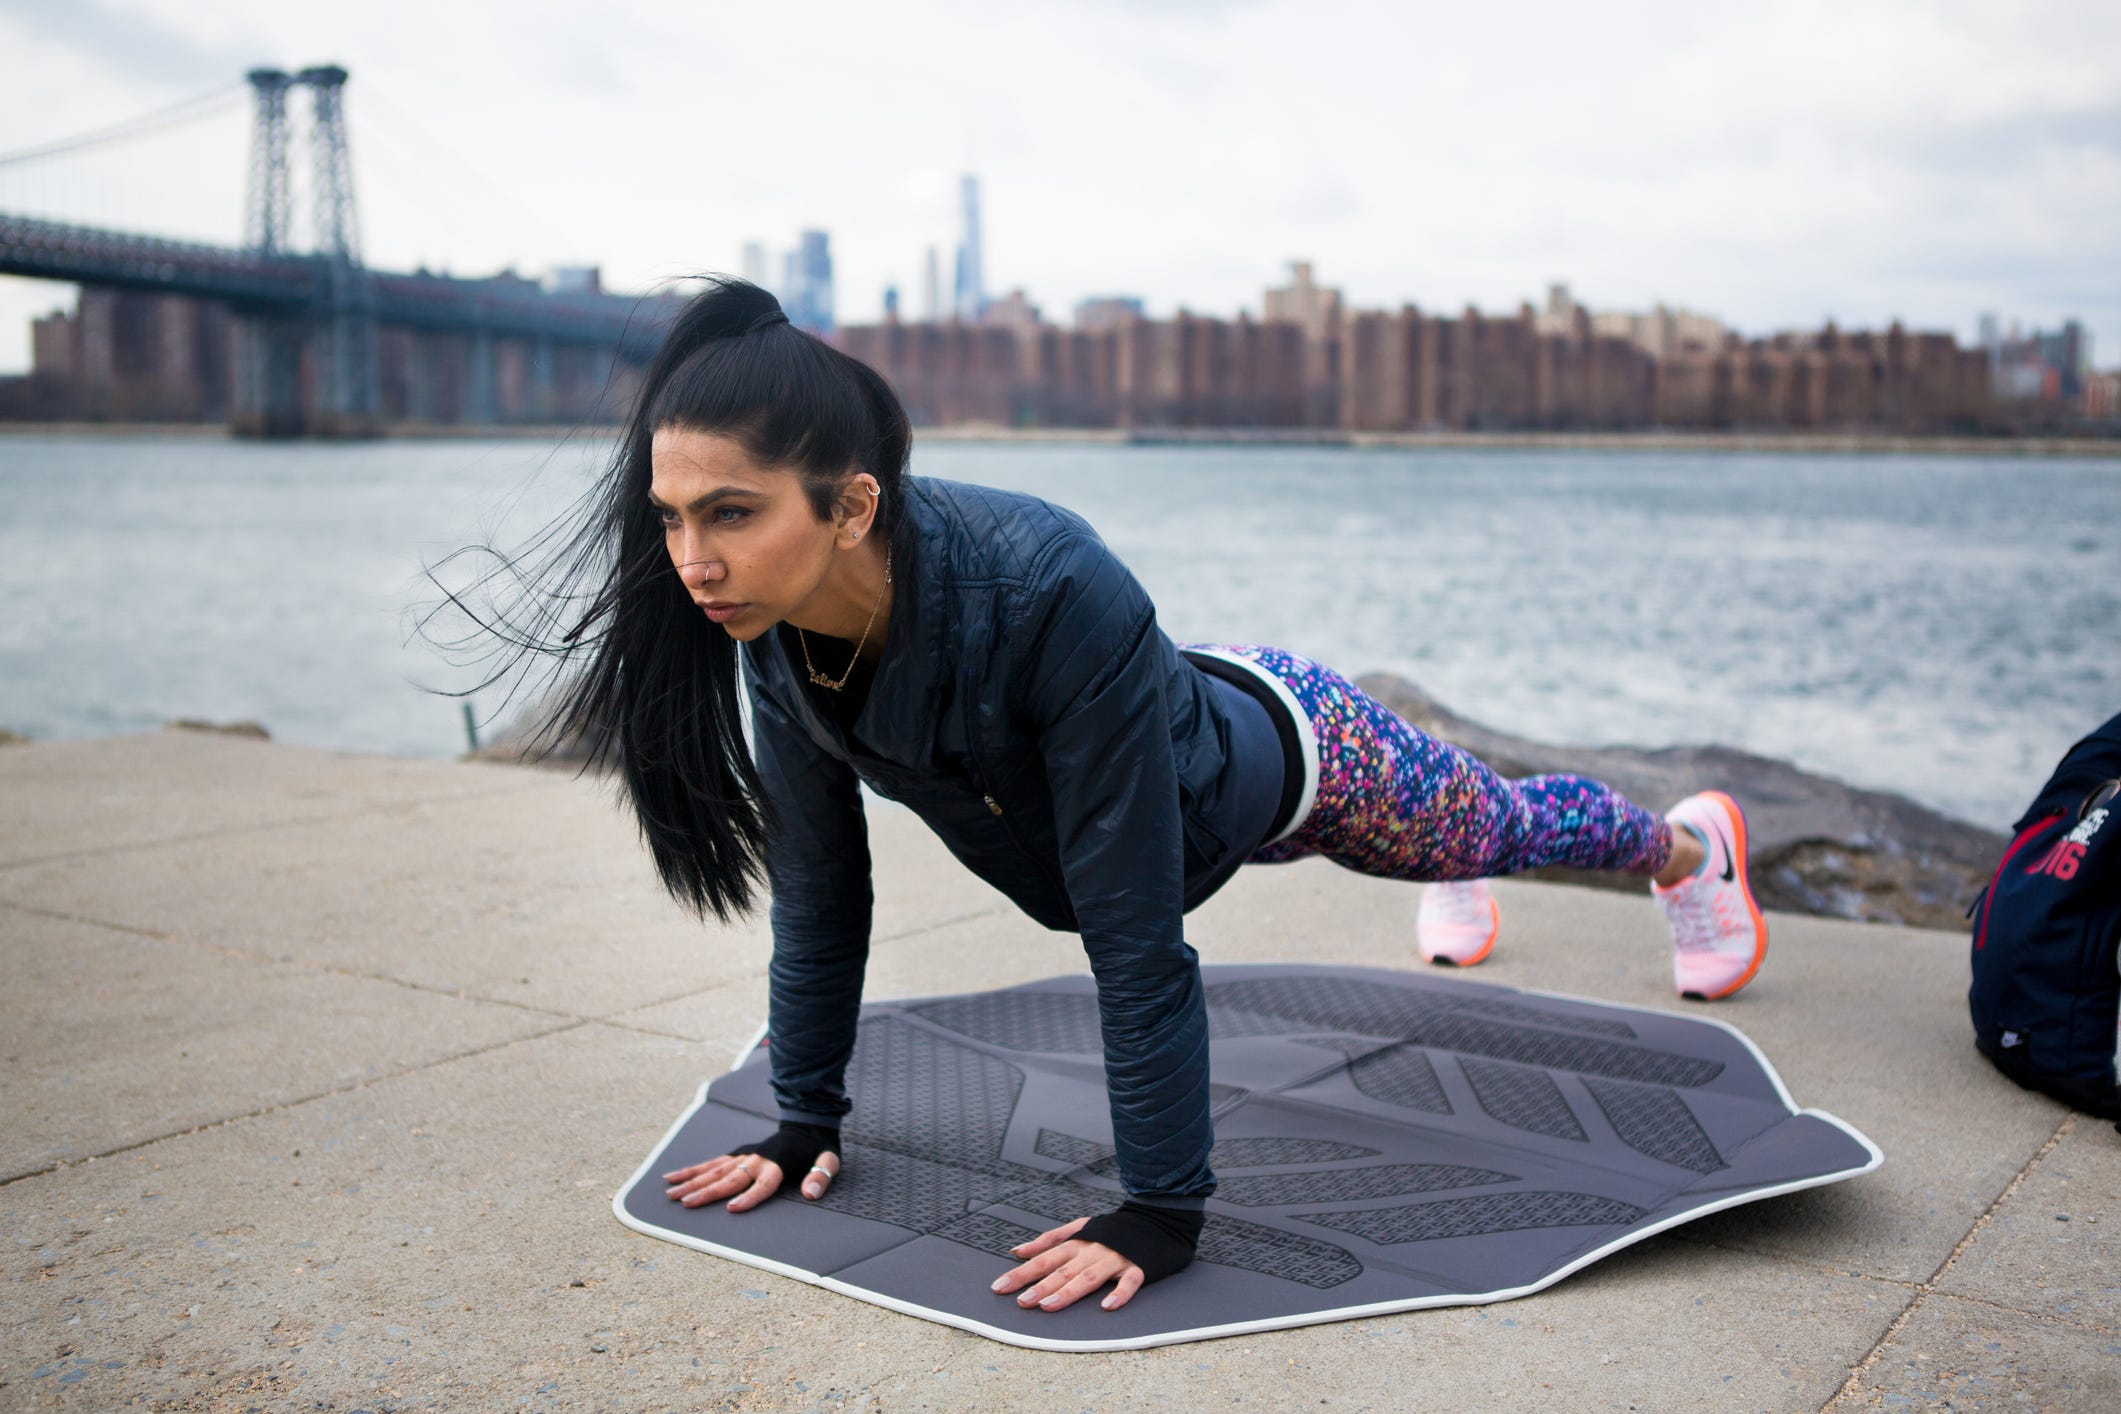 yoga plank pose